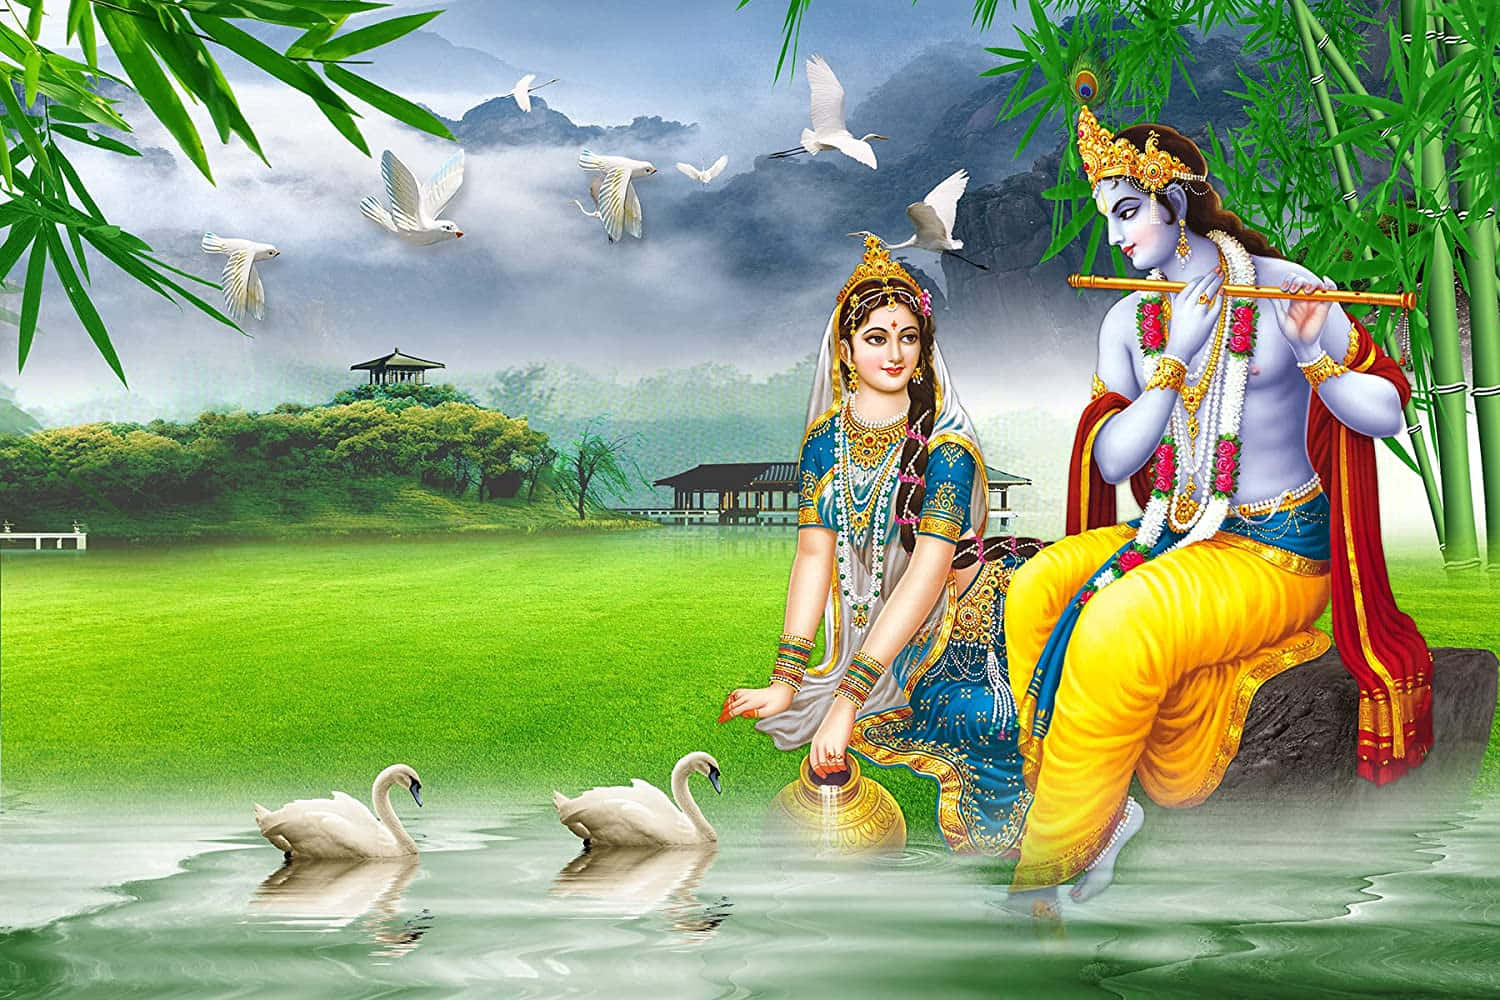 Explore the wisdom and beauty of Krishna